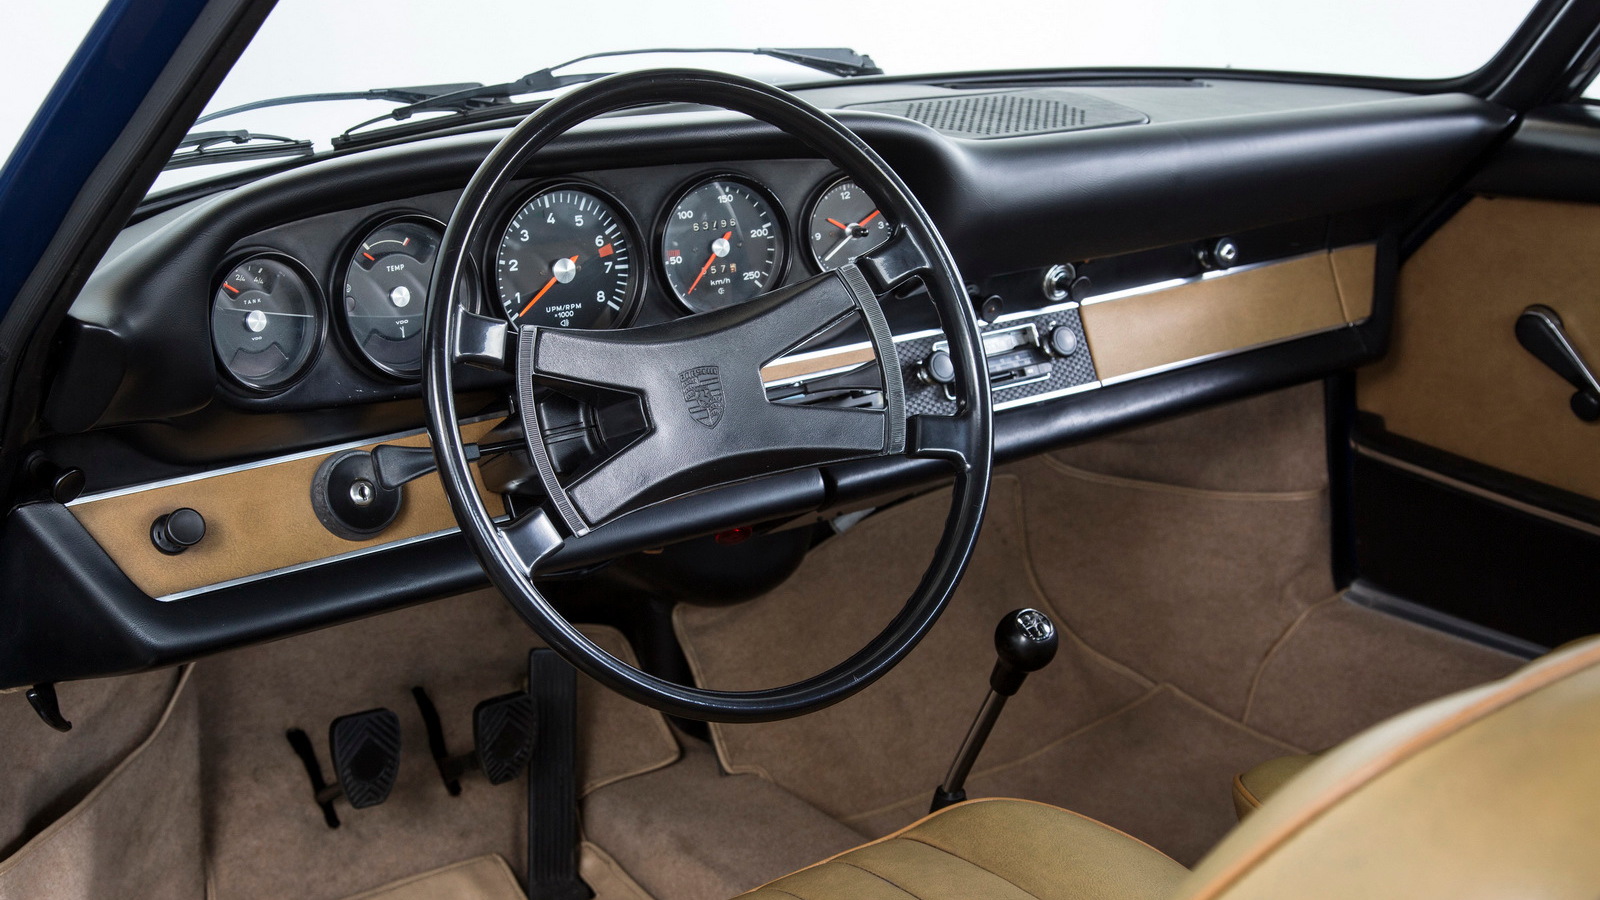 Porsche Classic’s new dashboard for 1969-1975 911s